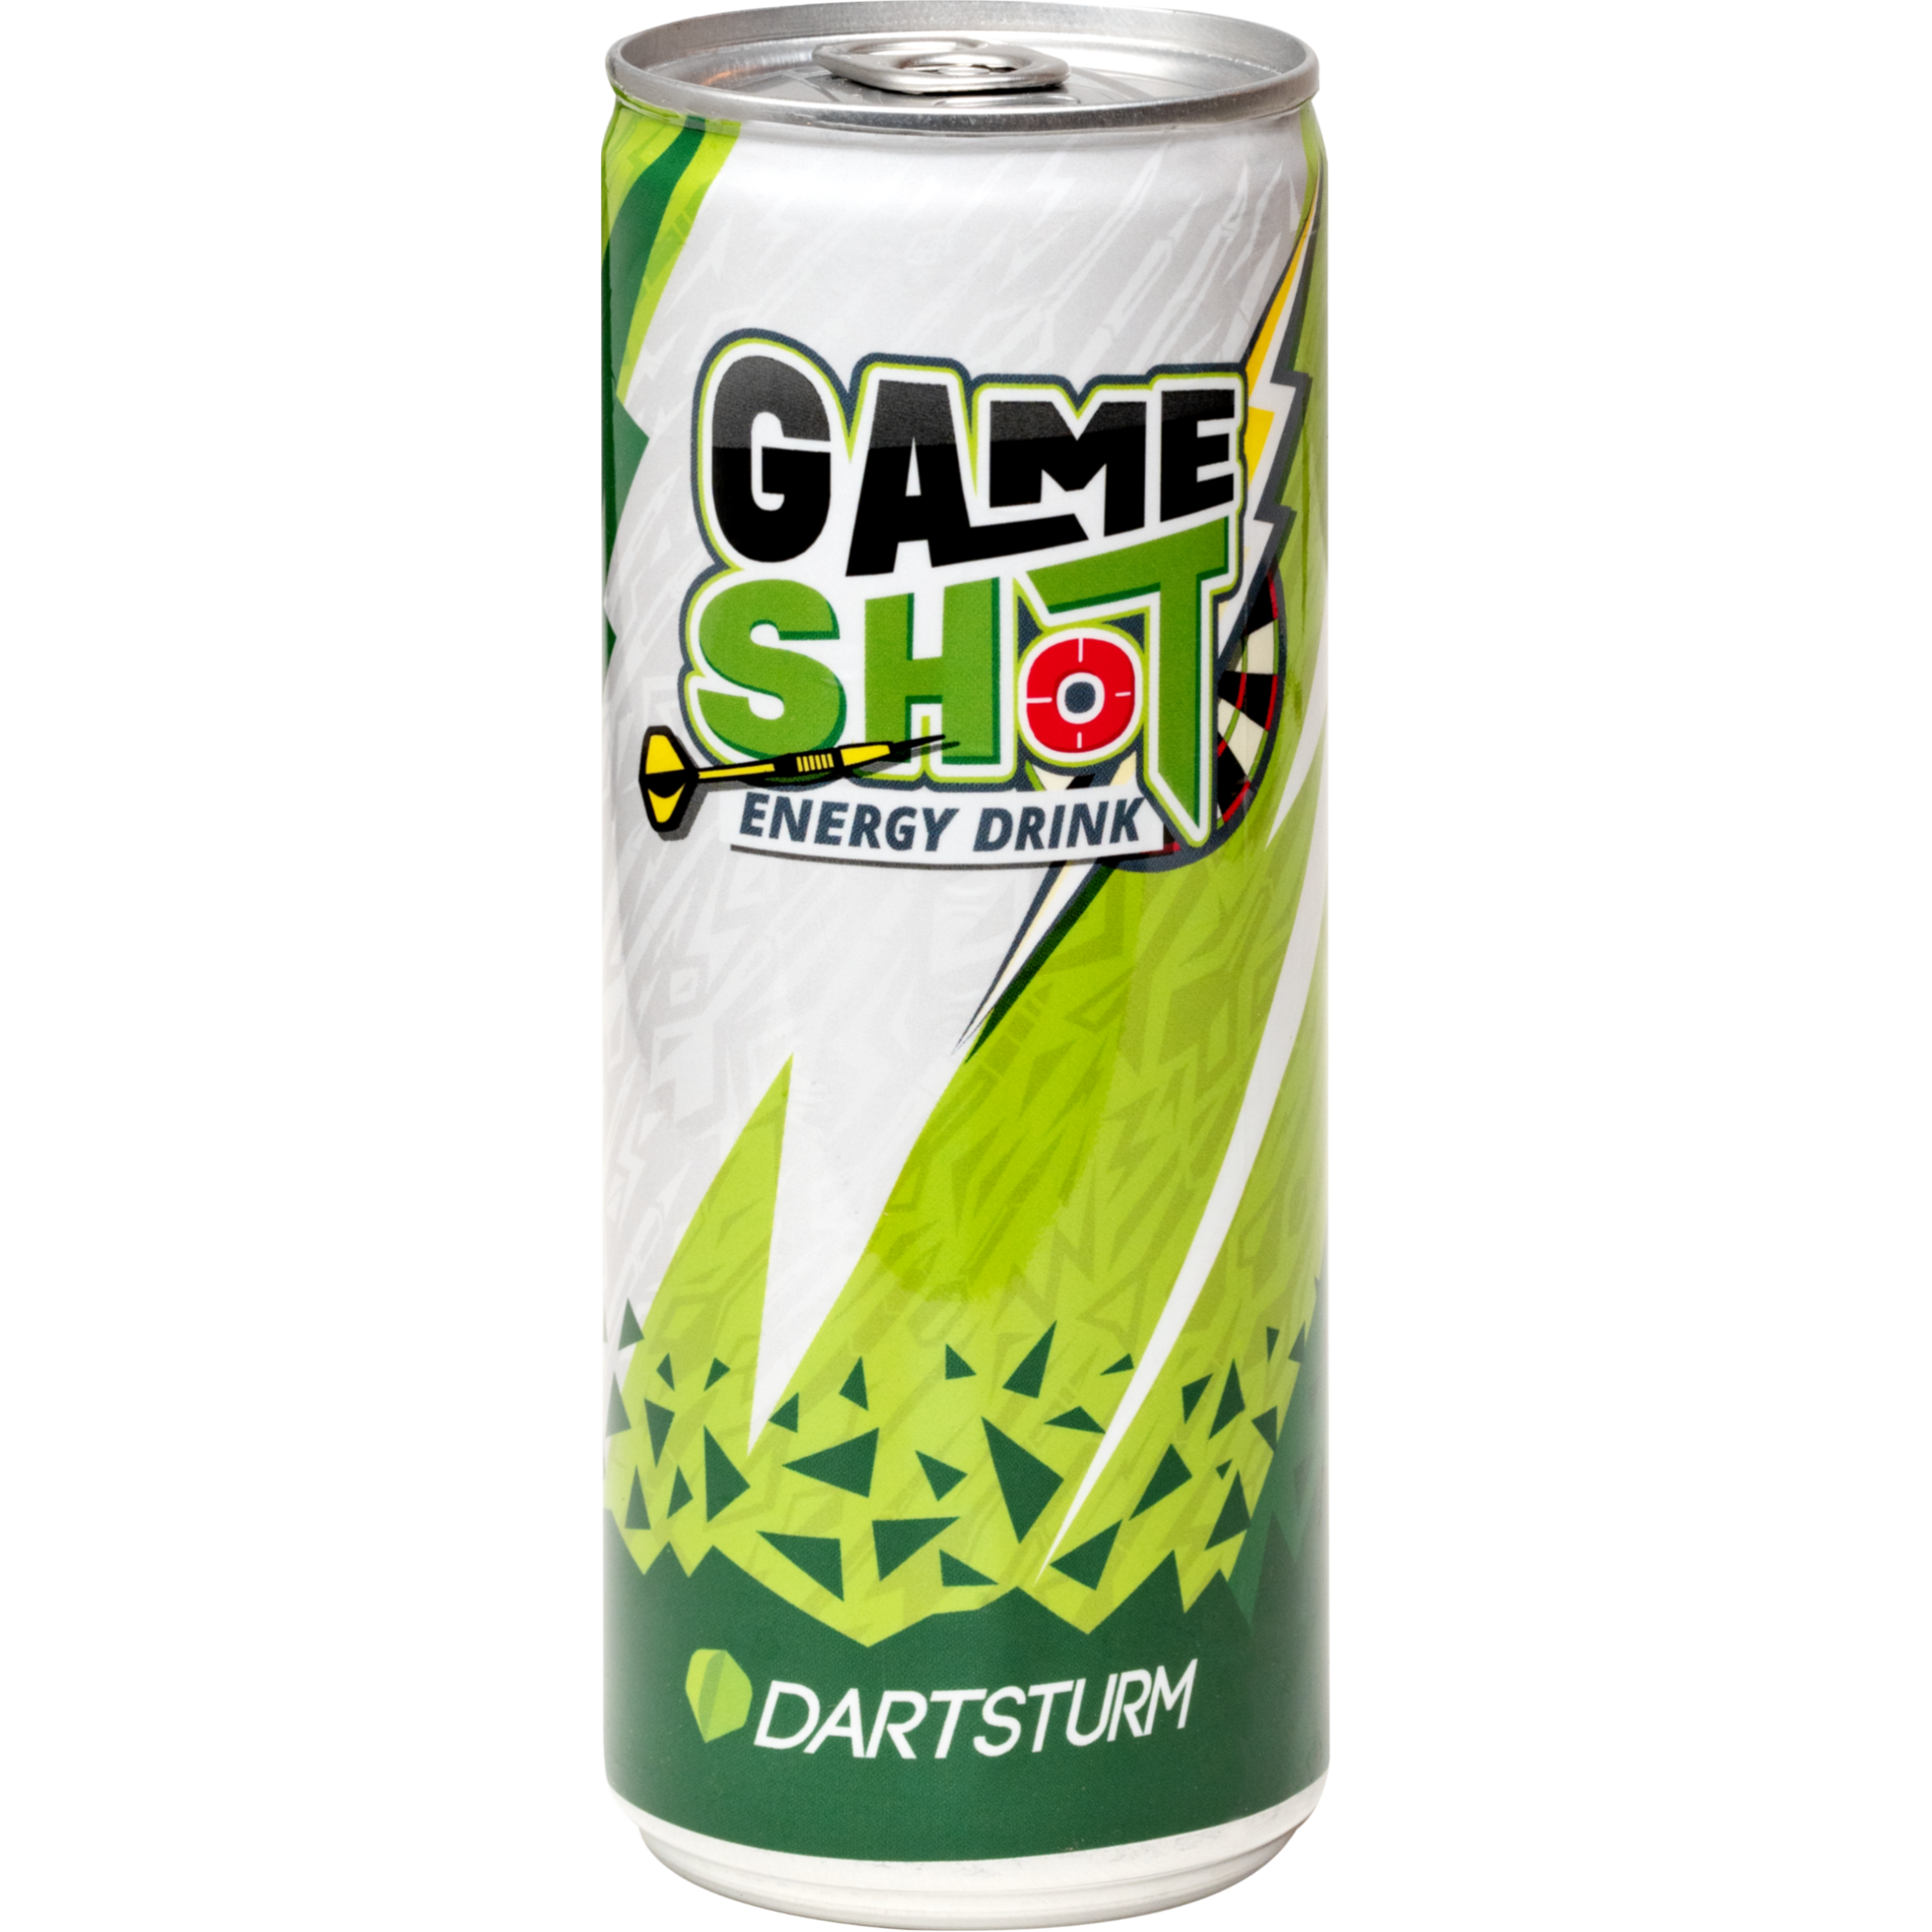 DartSturm - Energy Drink "Game Shot"